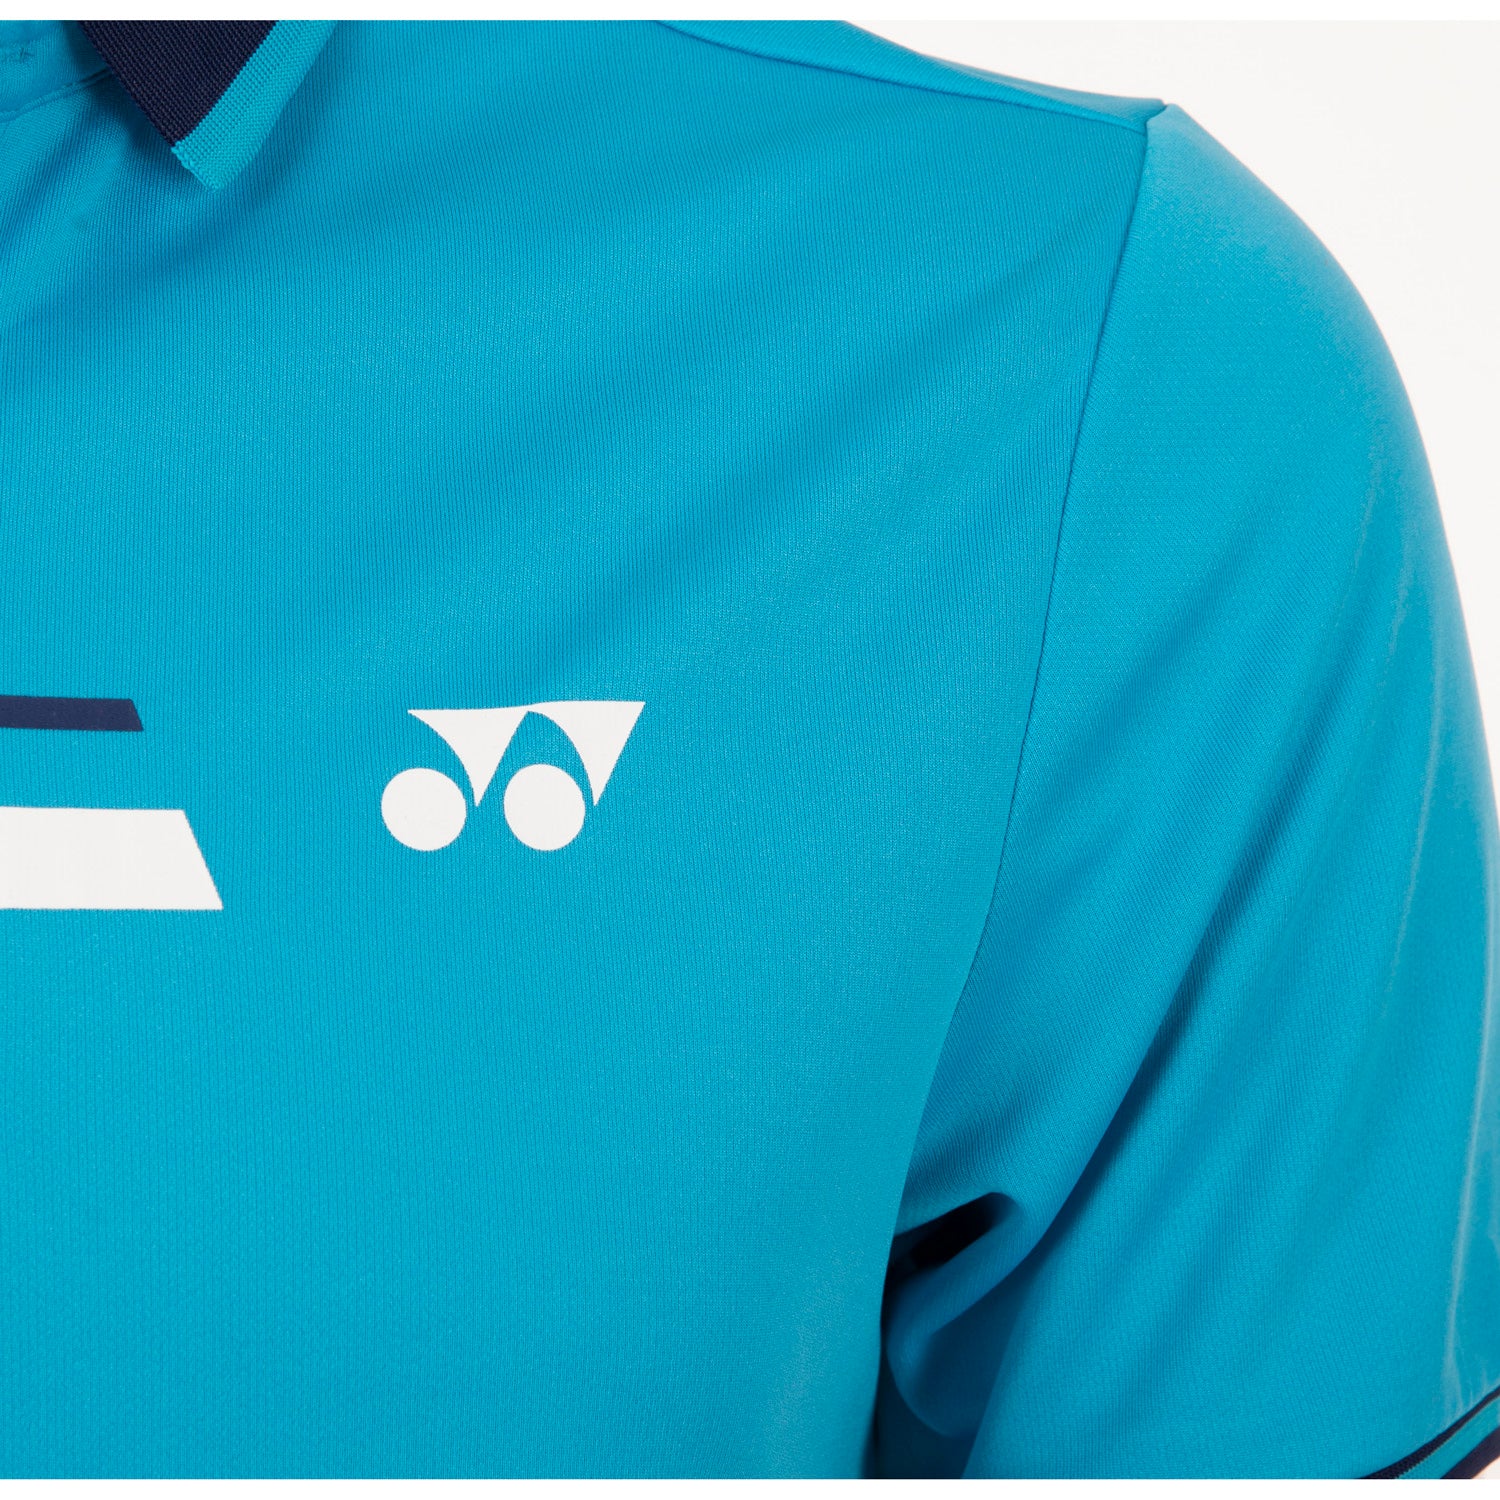 Yonex Badminton Polo T Shirt for Junior, Cyan Blue - Best Price online Prokicksports.com